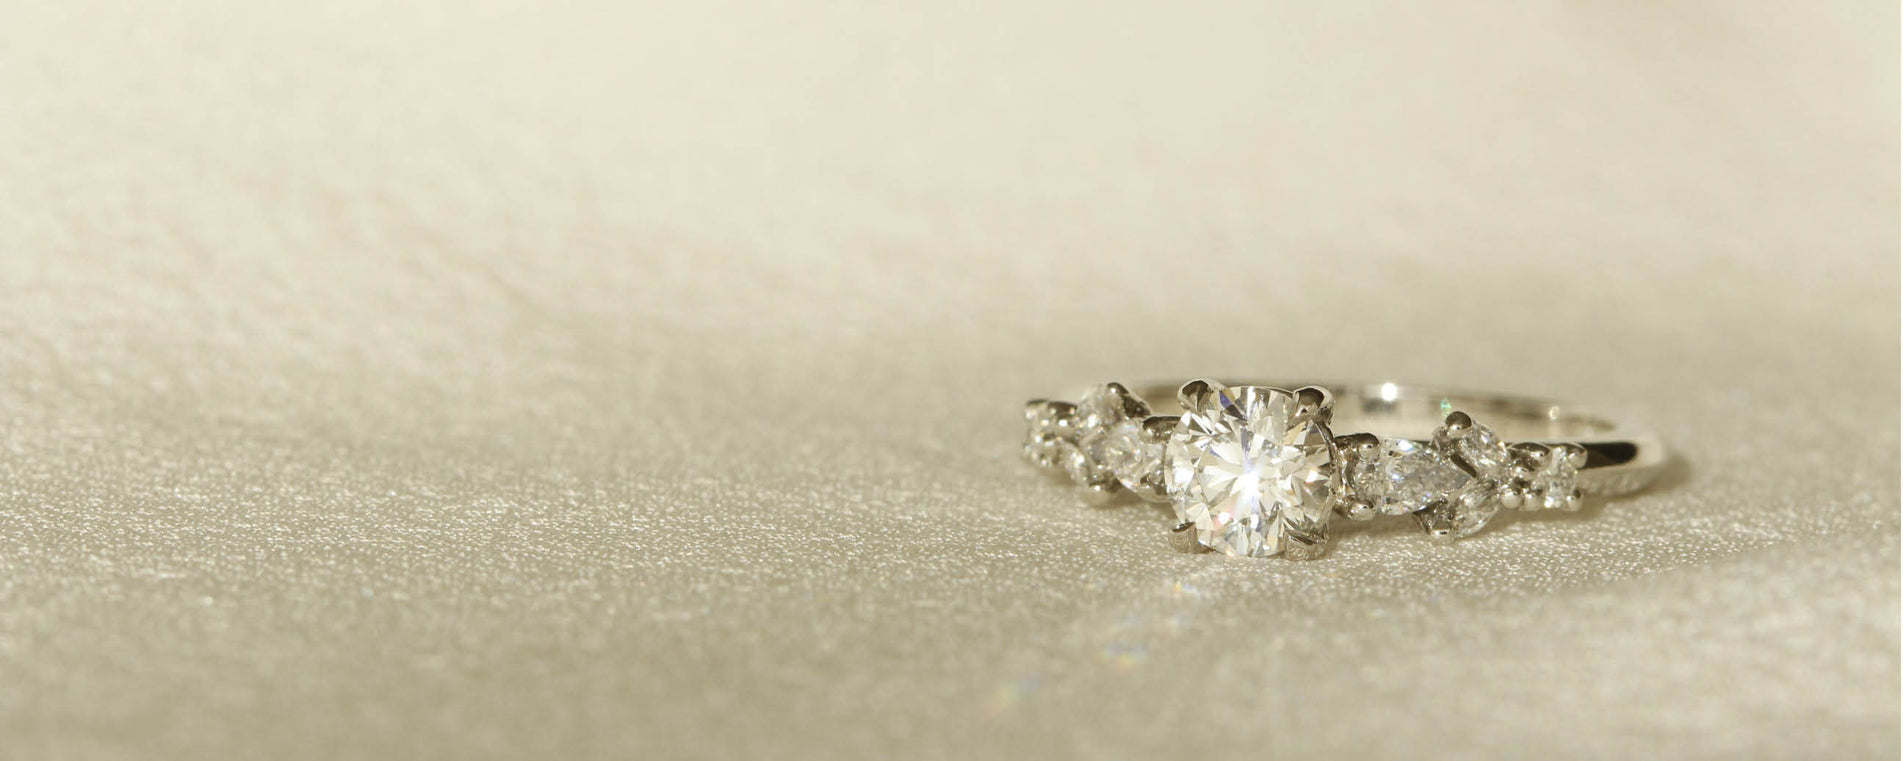 Orsini Nesso Engagement Ring Design with brilliant round diamonds, pear diamonds, marquise diamonds